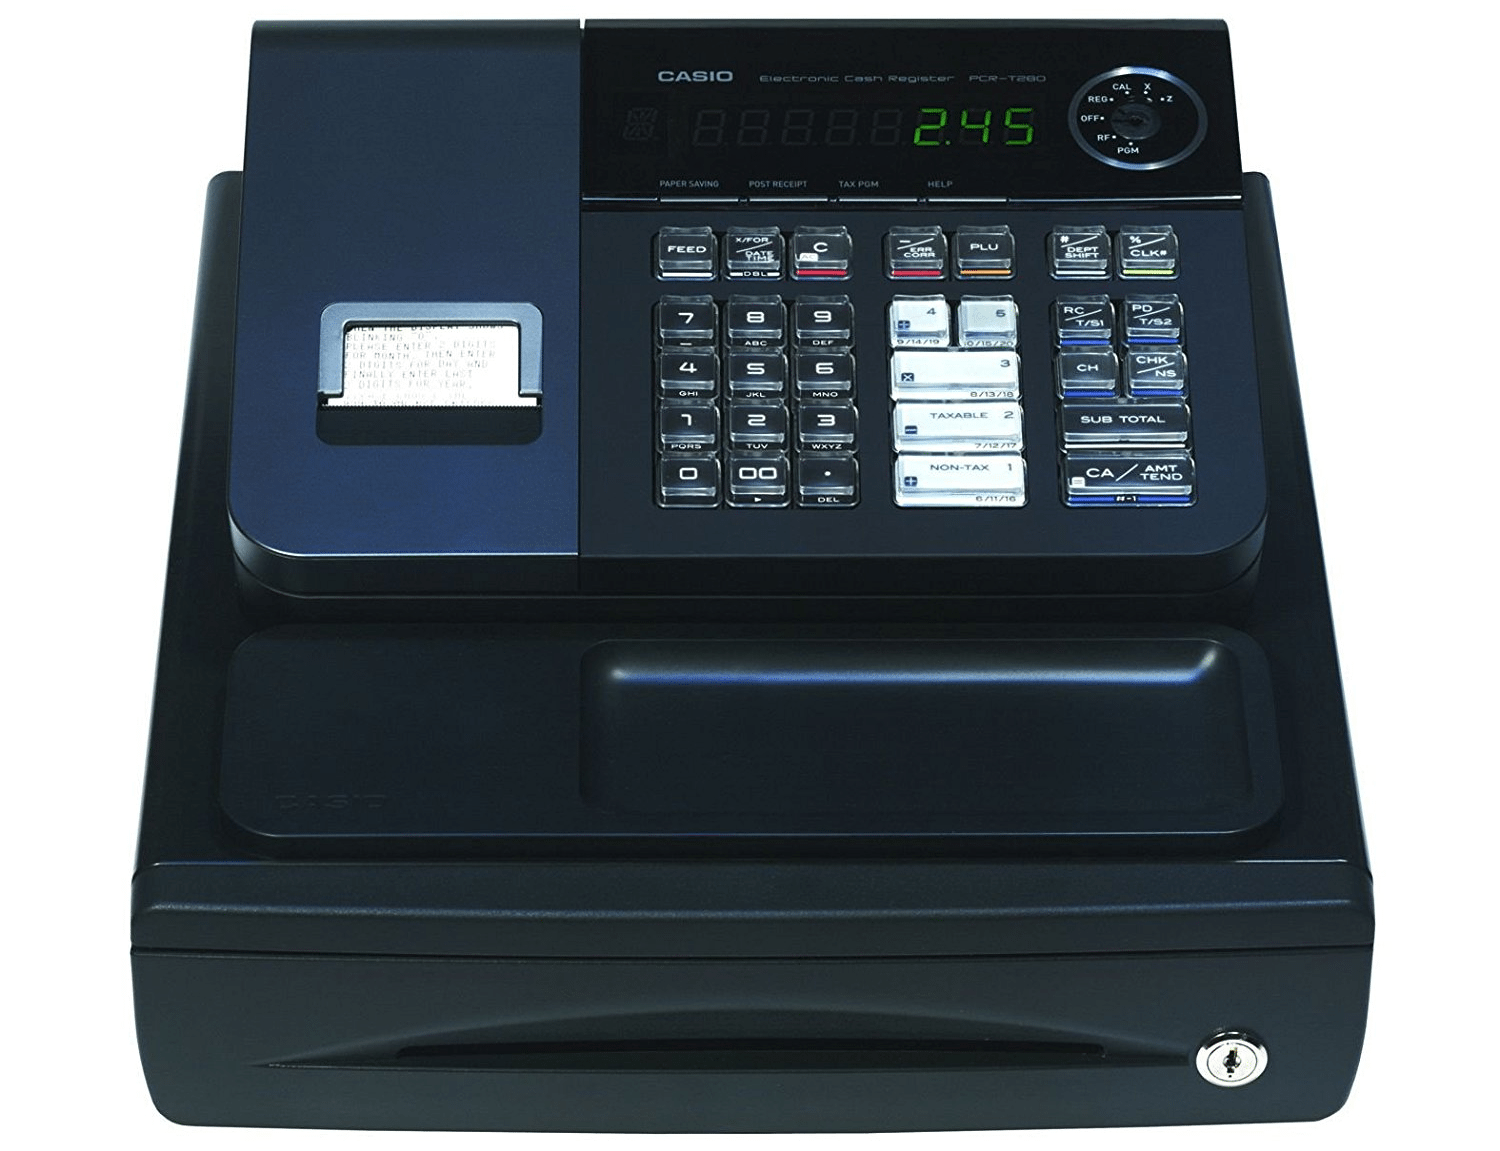 cash register features